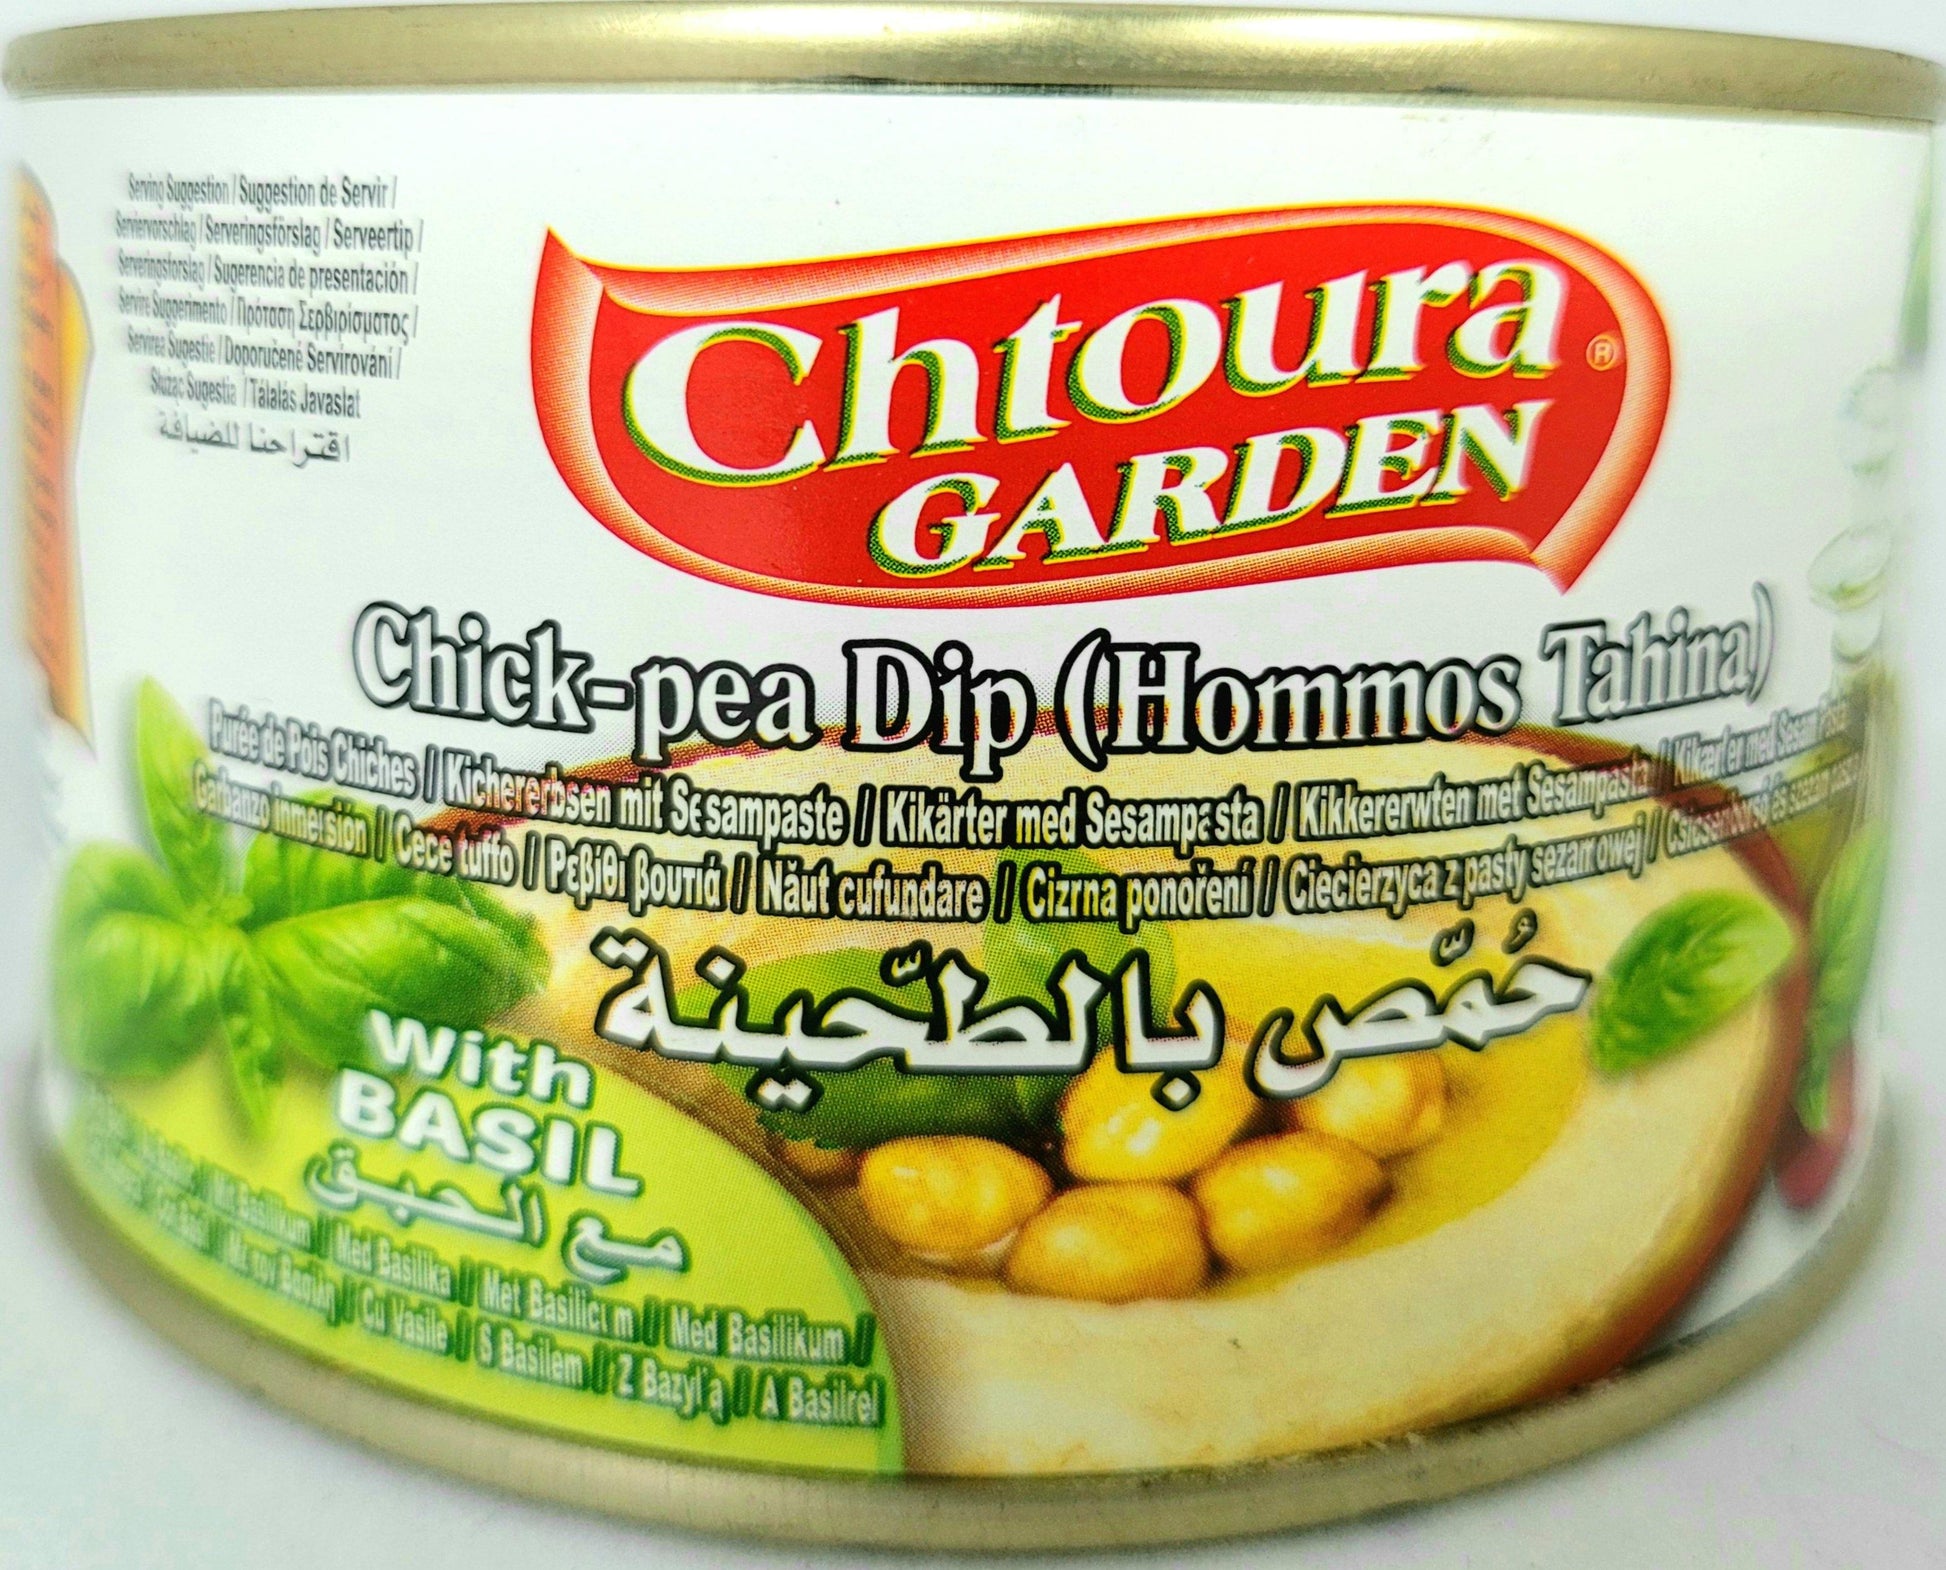 Chtoura Garden Chickpeas Dip Hommos Tahina with Basil 420g - Arabian Shopping Zone